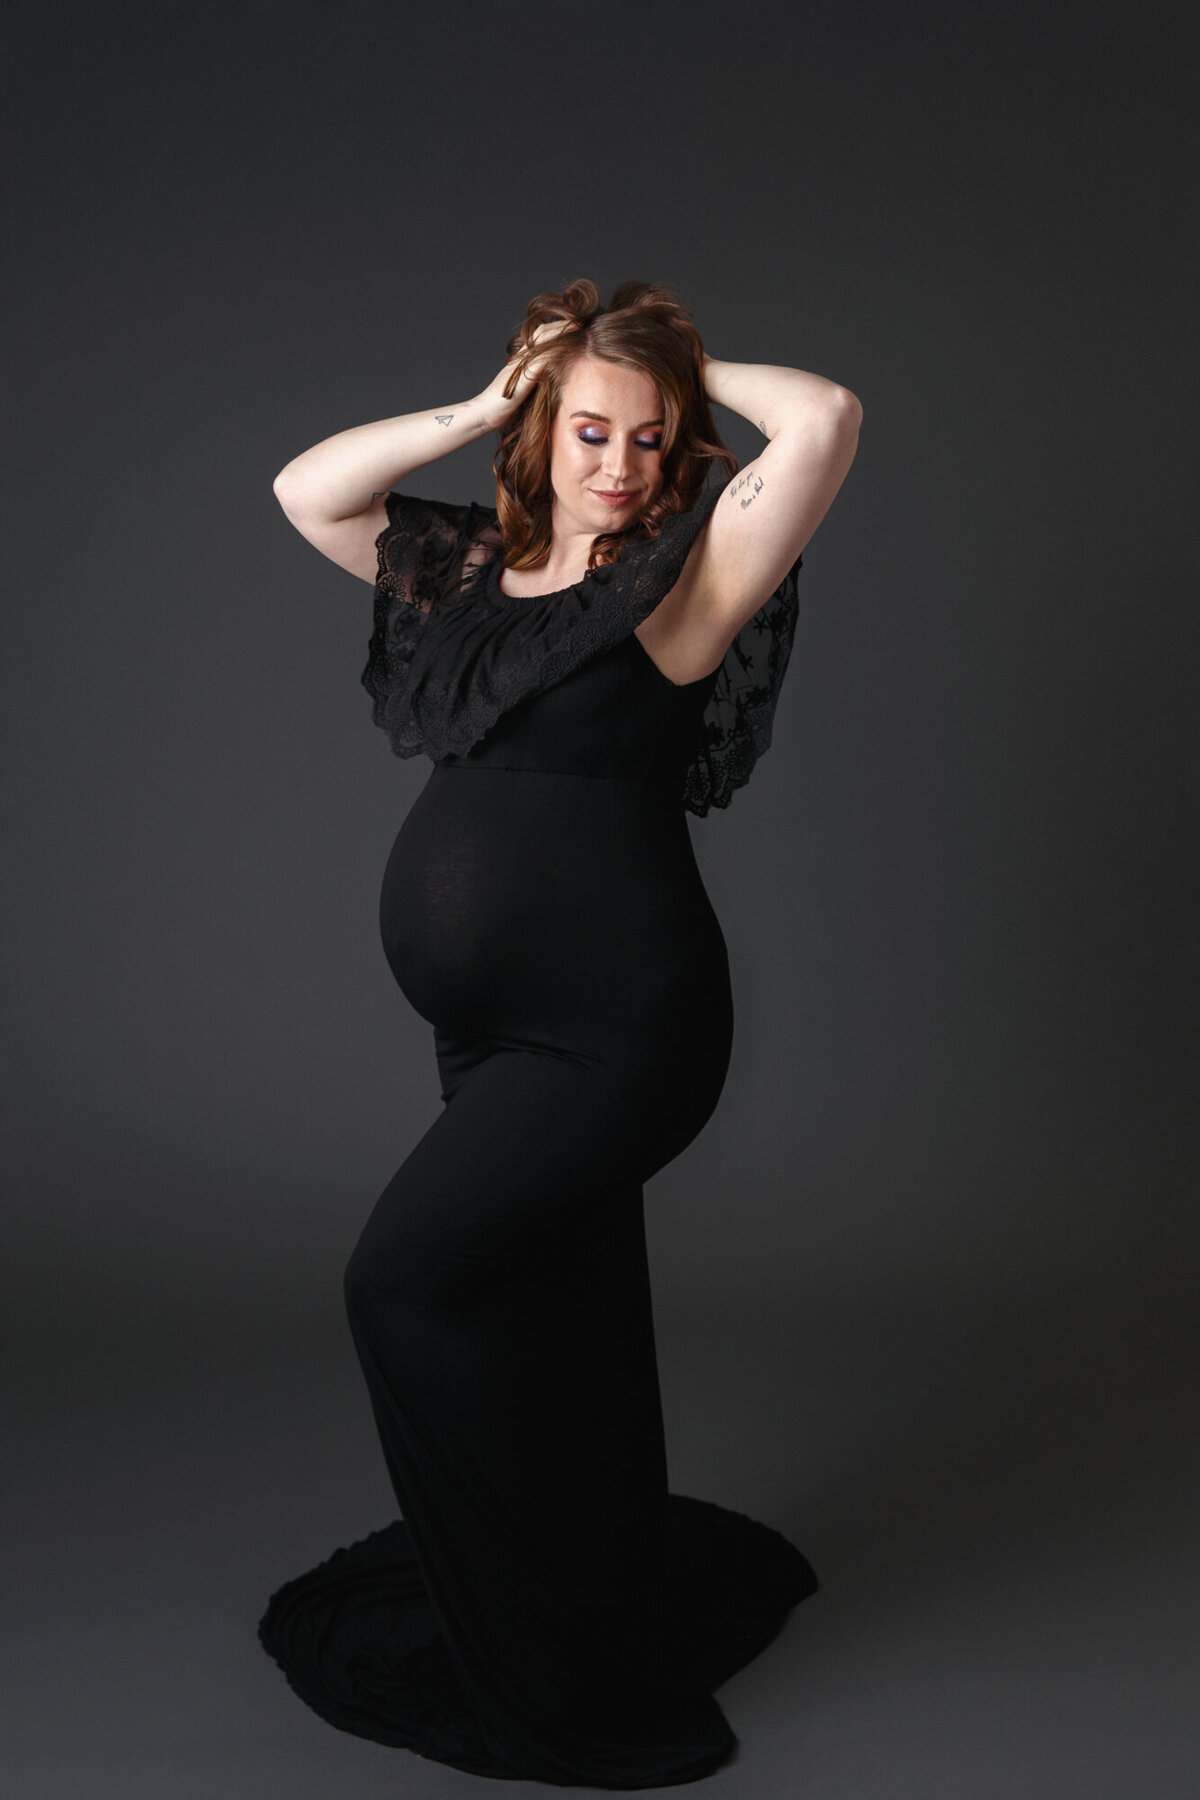 Full lenth portrait of a  pregnant woman wearing a black dress